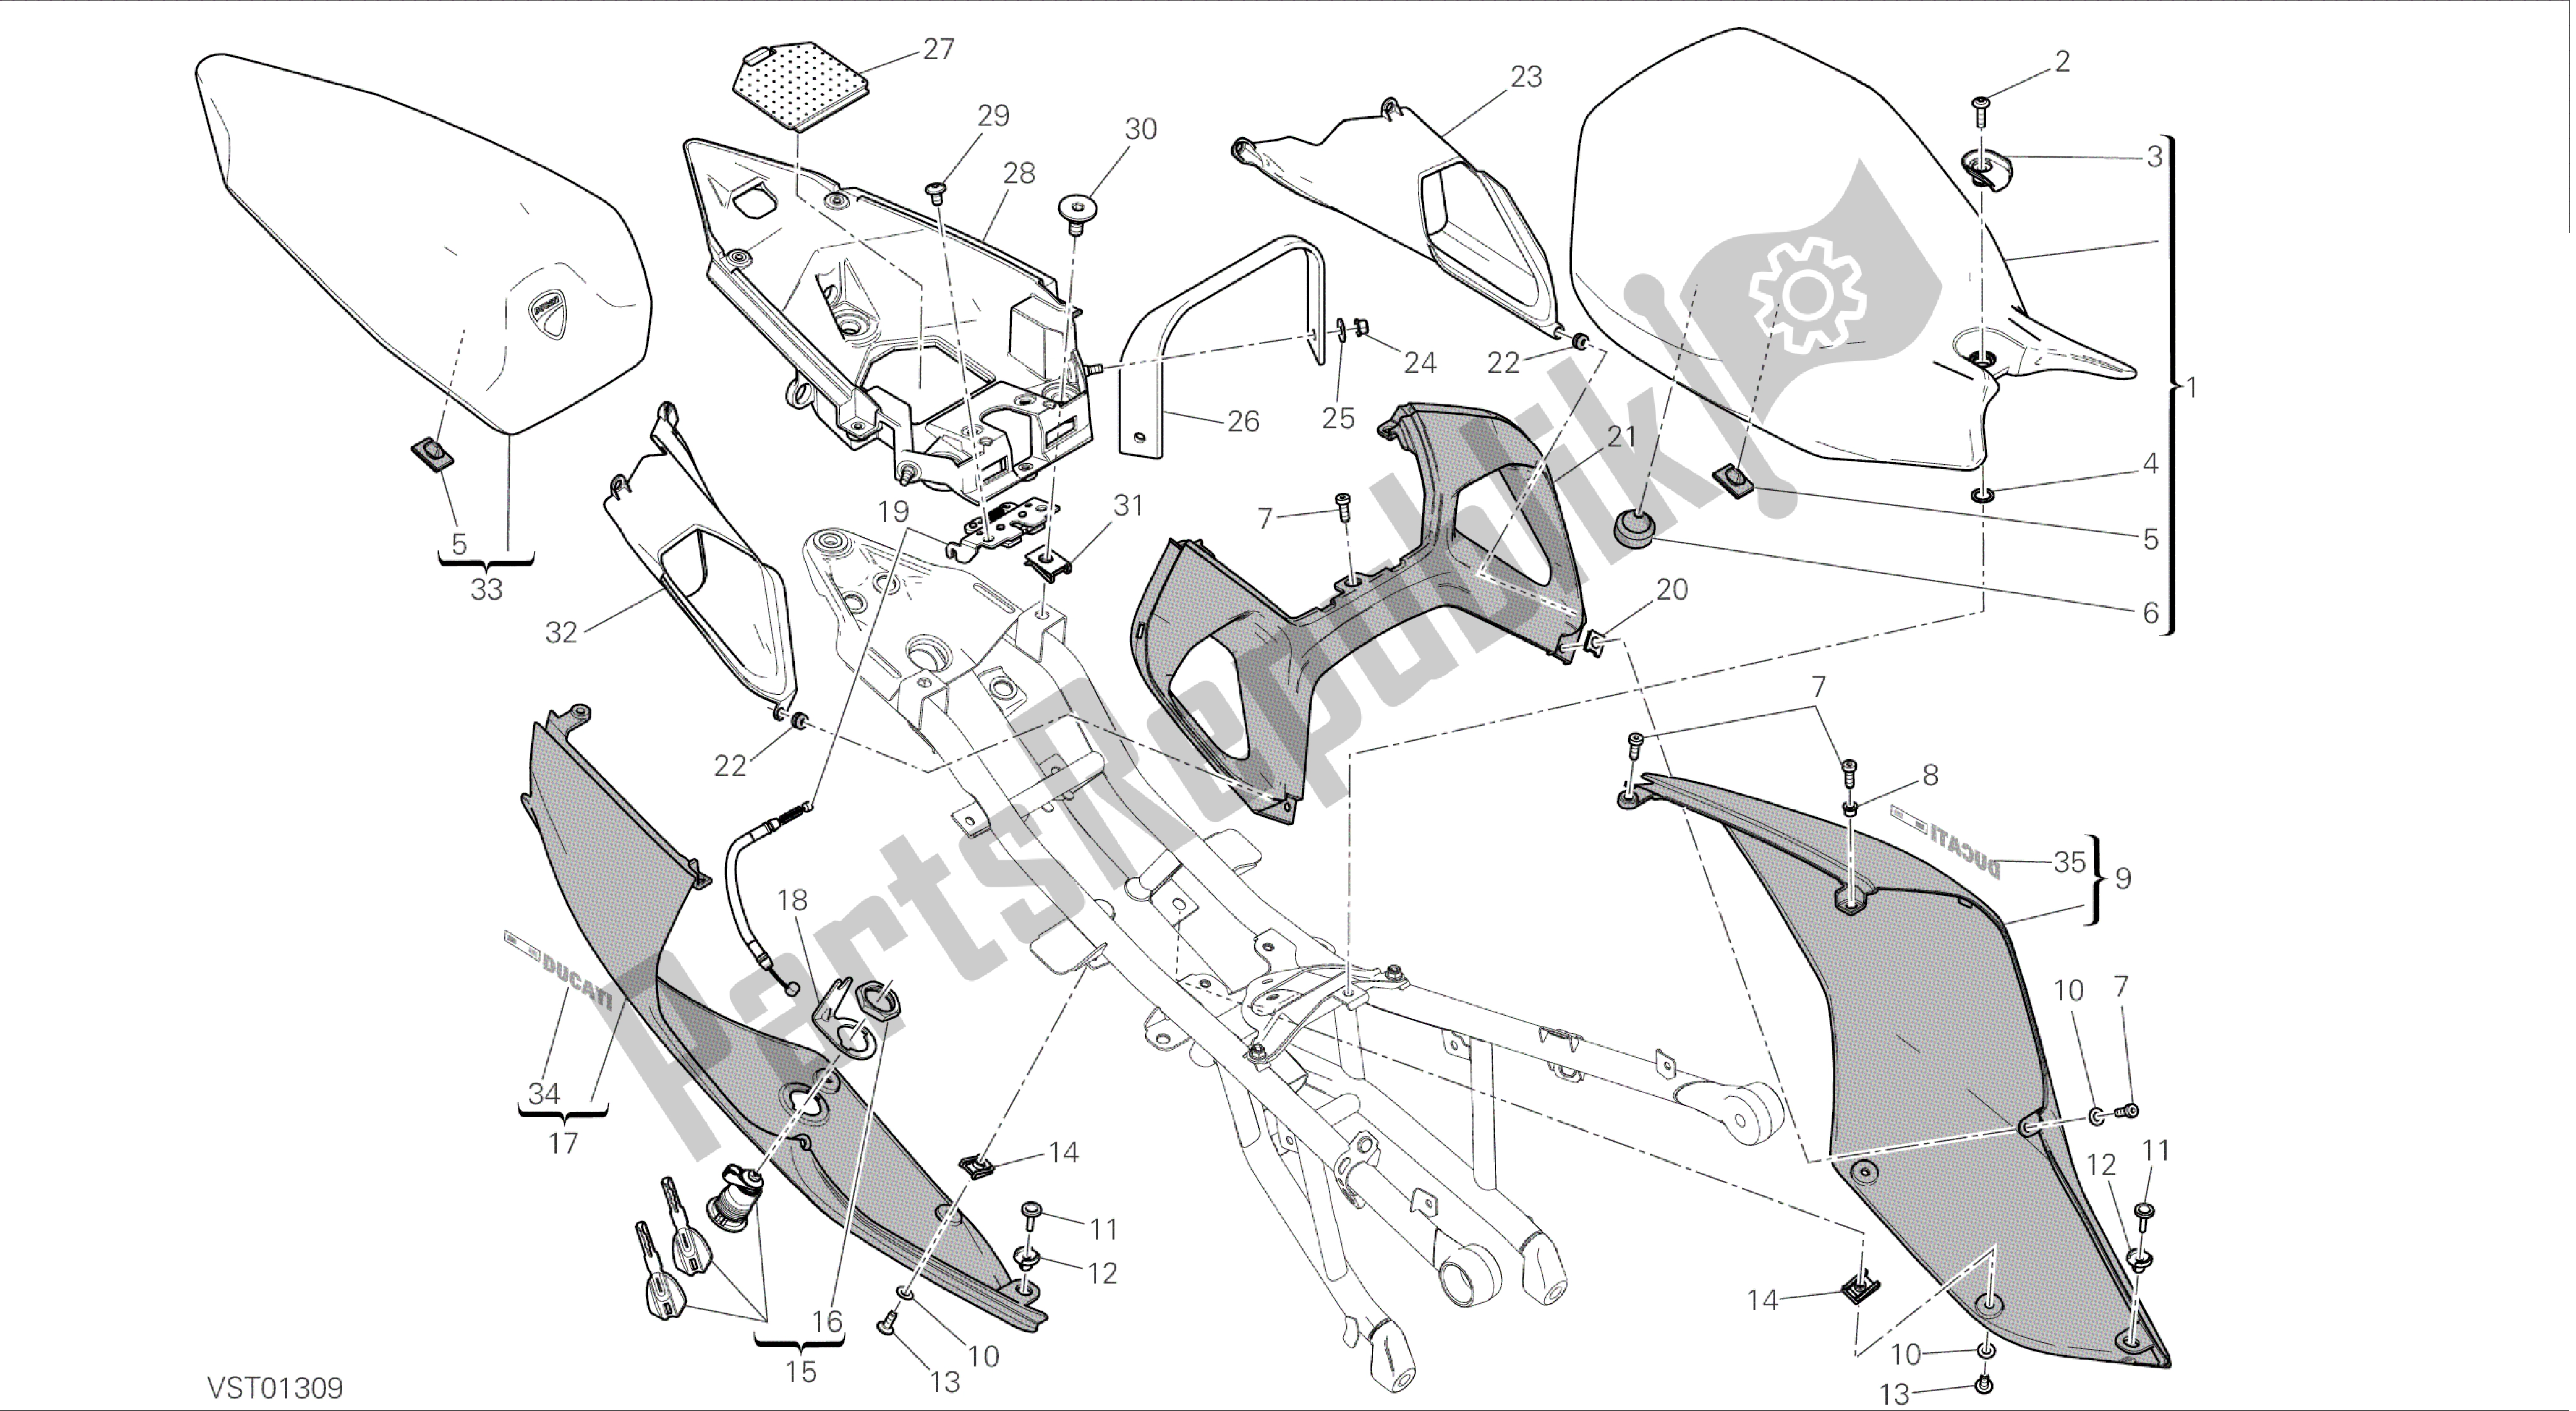 Alle onderdelen voor de Tekening 033 - Stoel [mod: 899 Abs; Xst: Aus, Eur, Fra, Jap, Twn] Groepsframe van de Ducati Panigale 899 2014